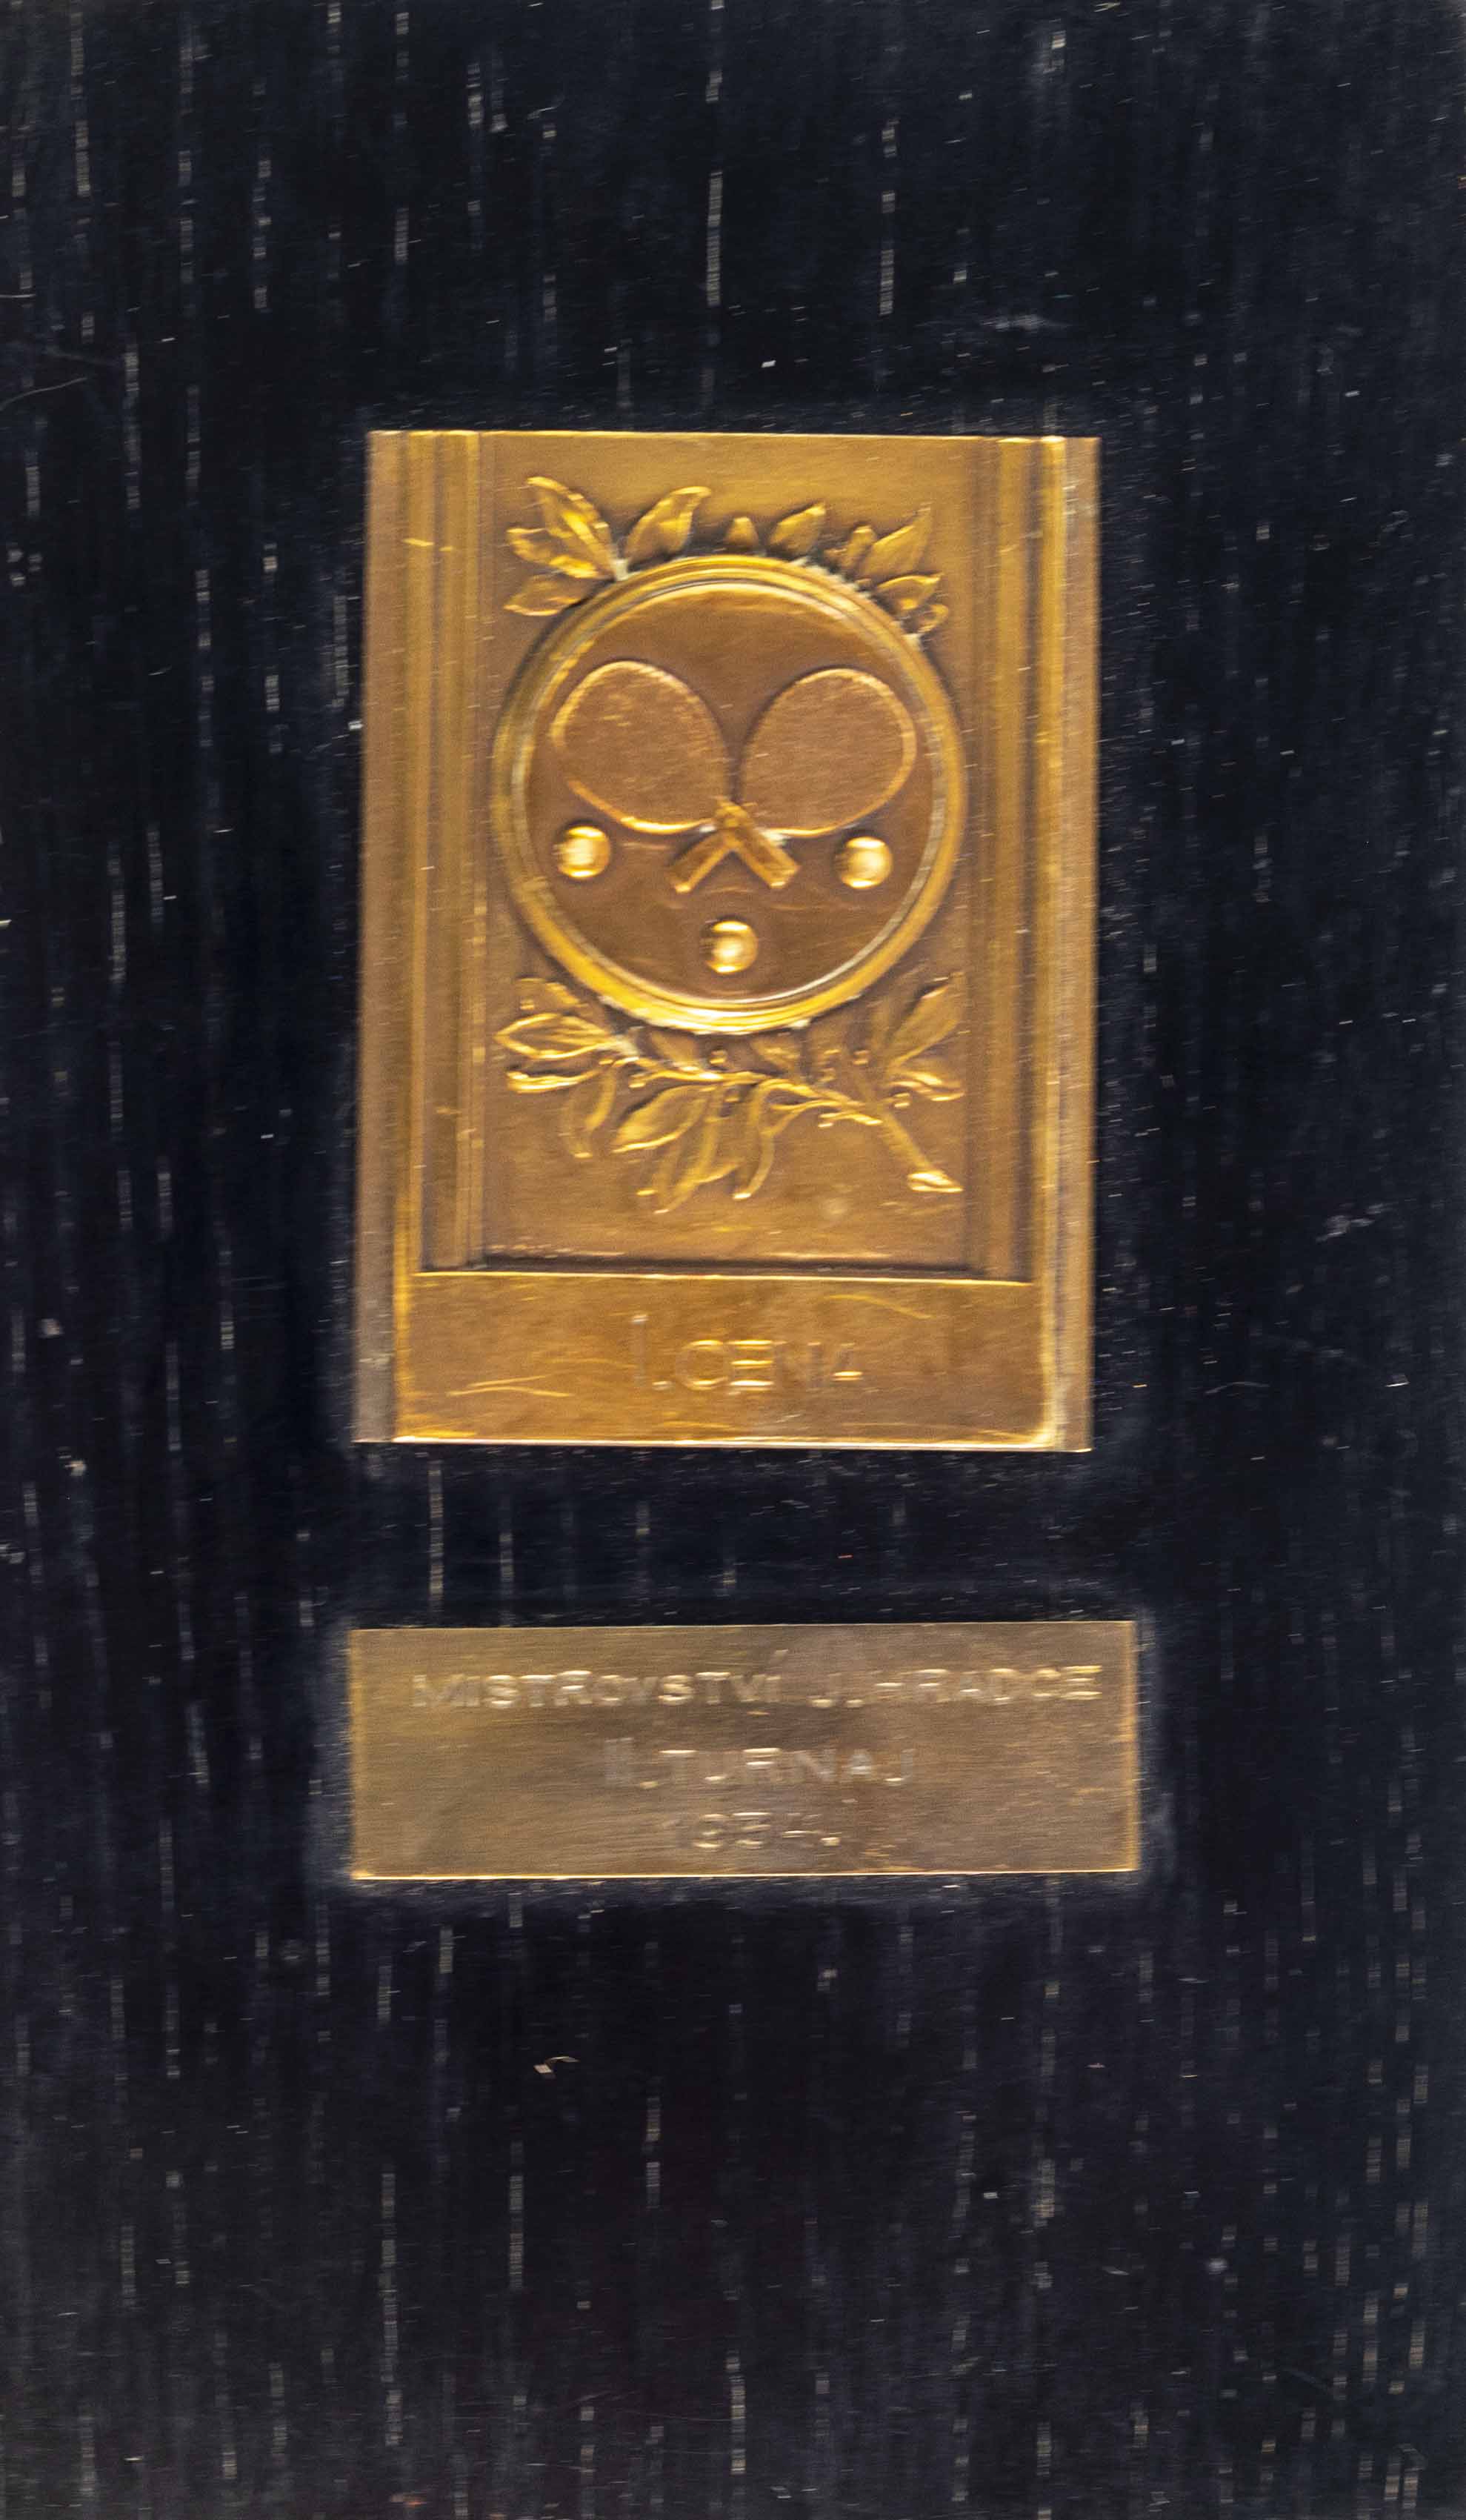 Trofej, medaile na dřevěné desce, tennis, 1934 (2)